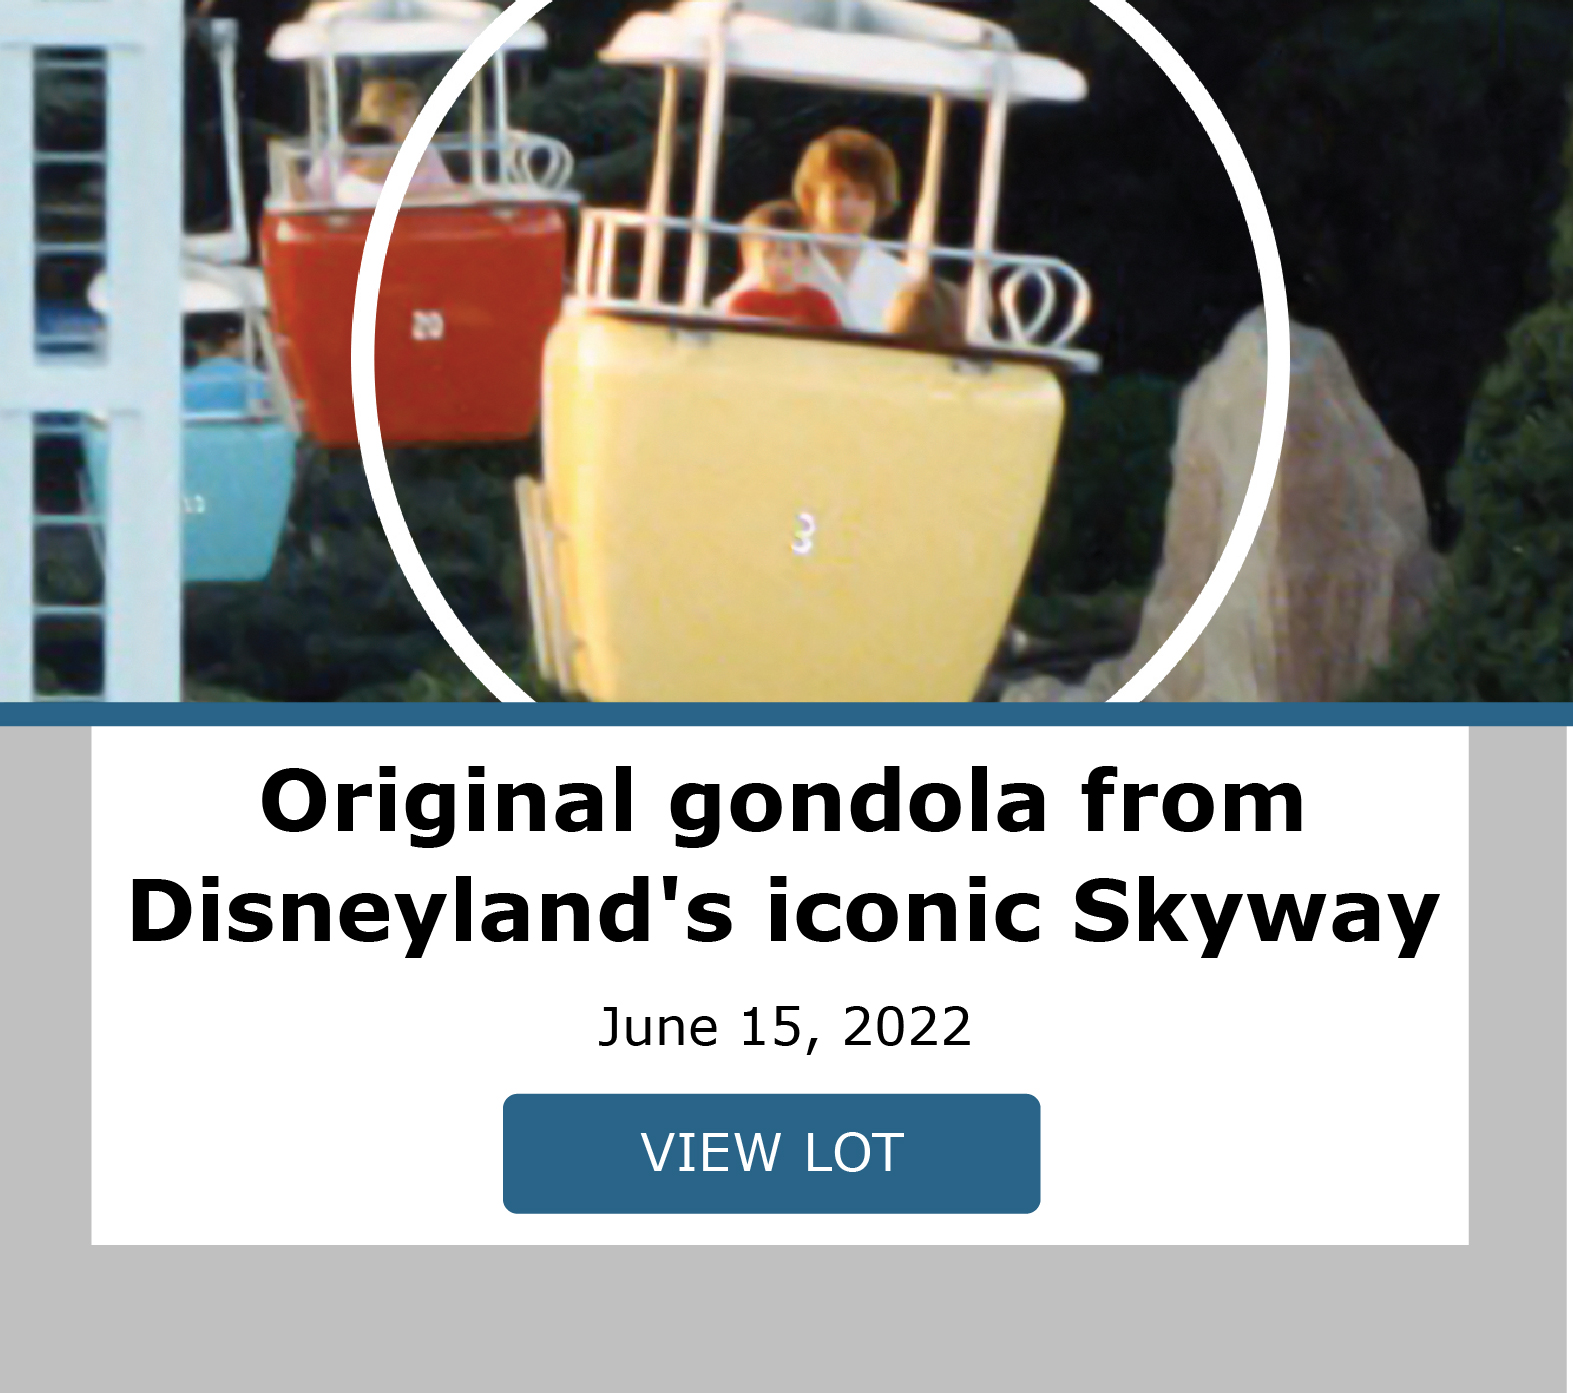 Original gondola from Disneyland's iconic Skyway. Bidding closes June 15, 2022!